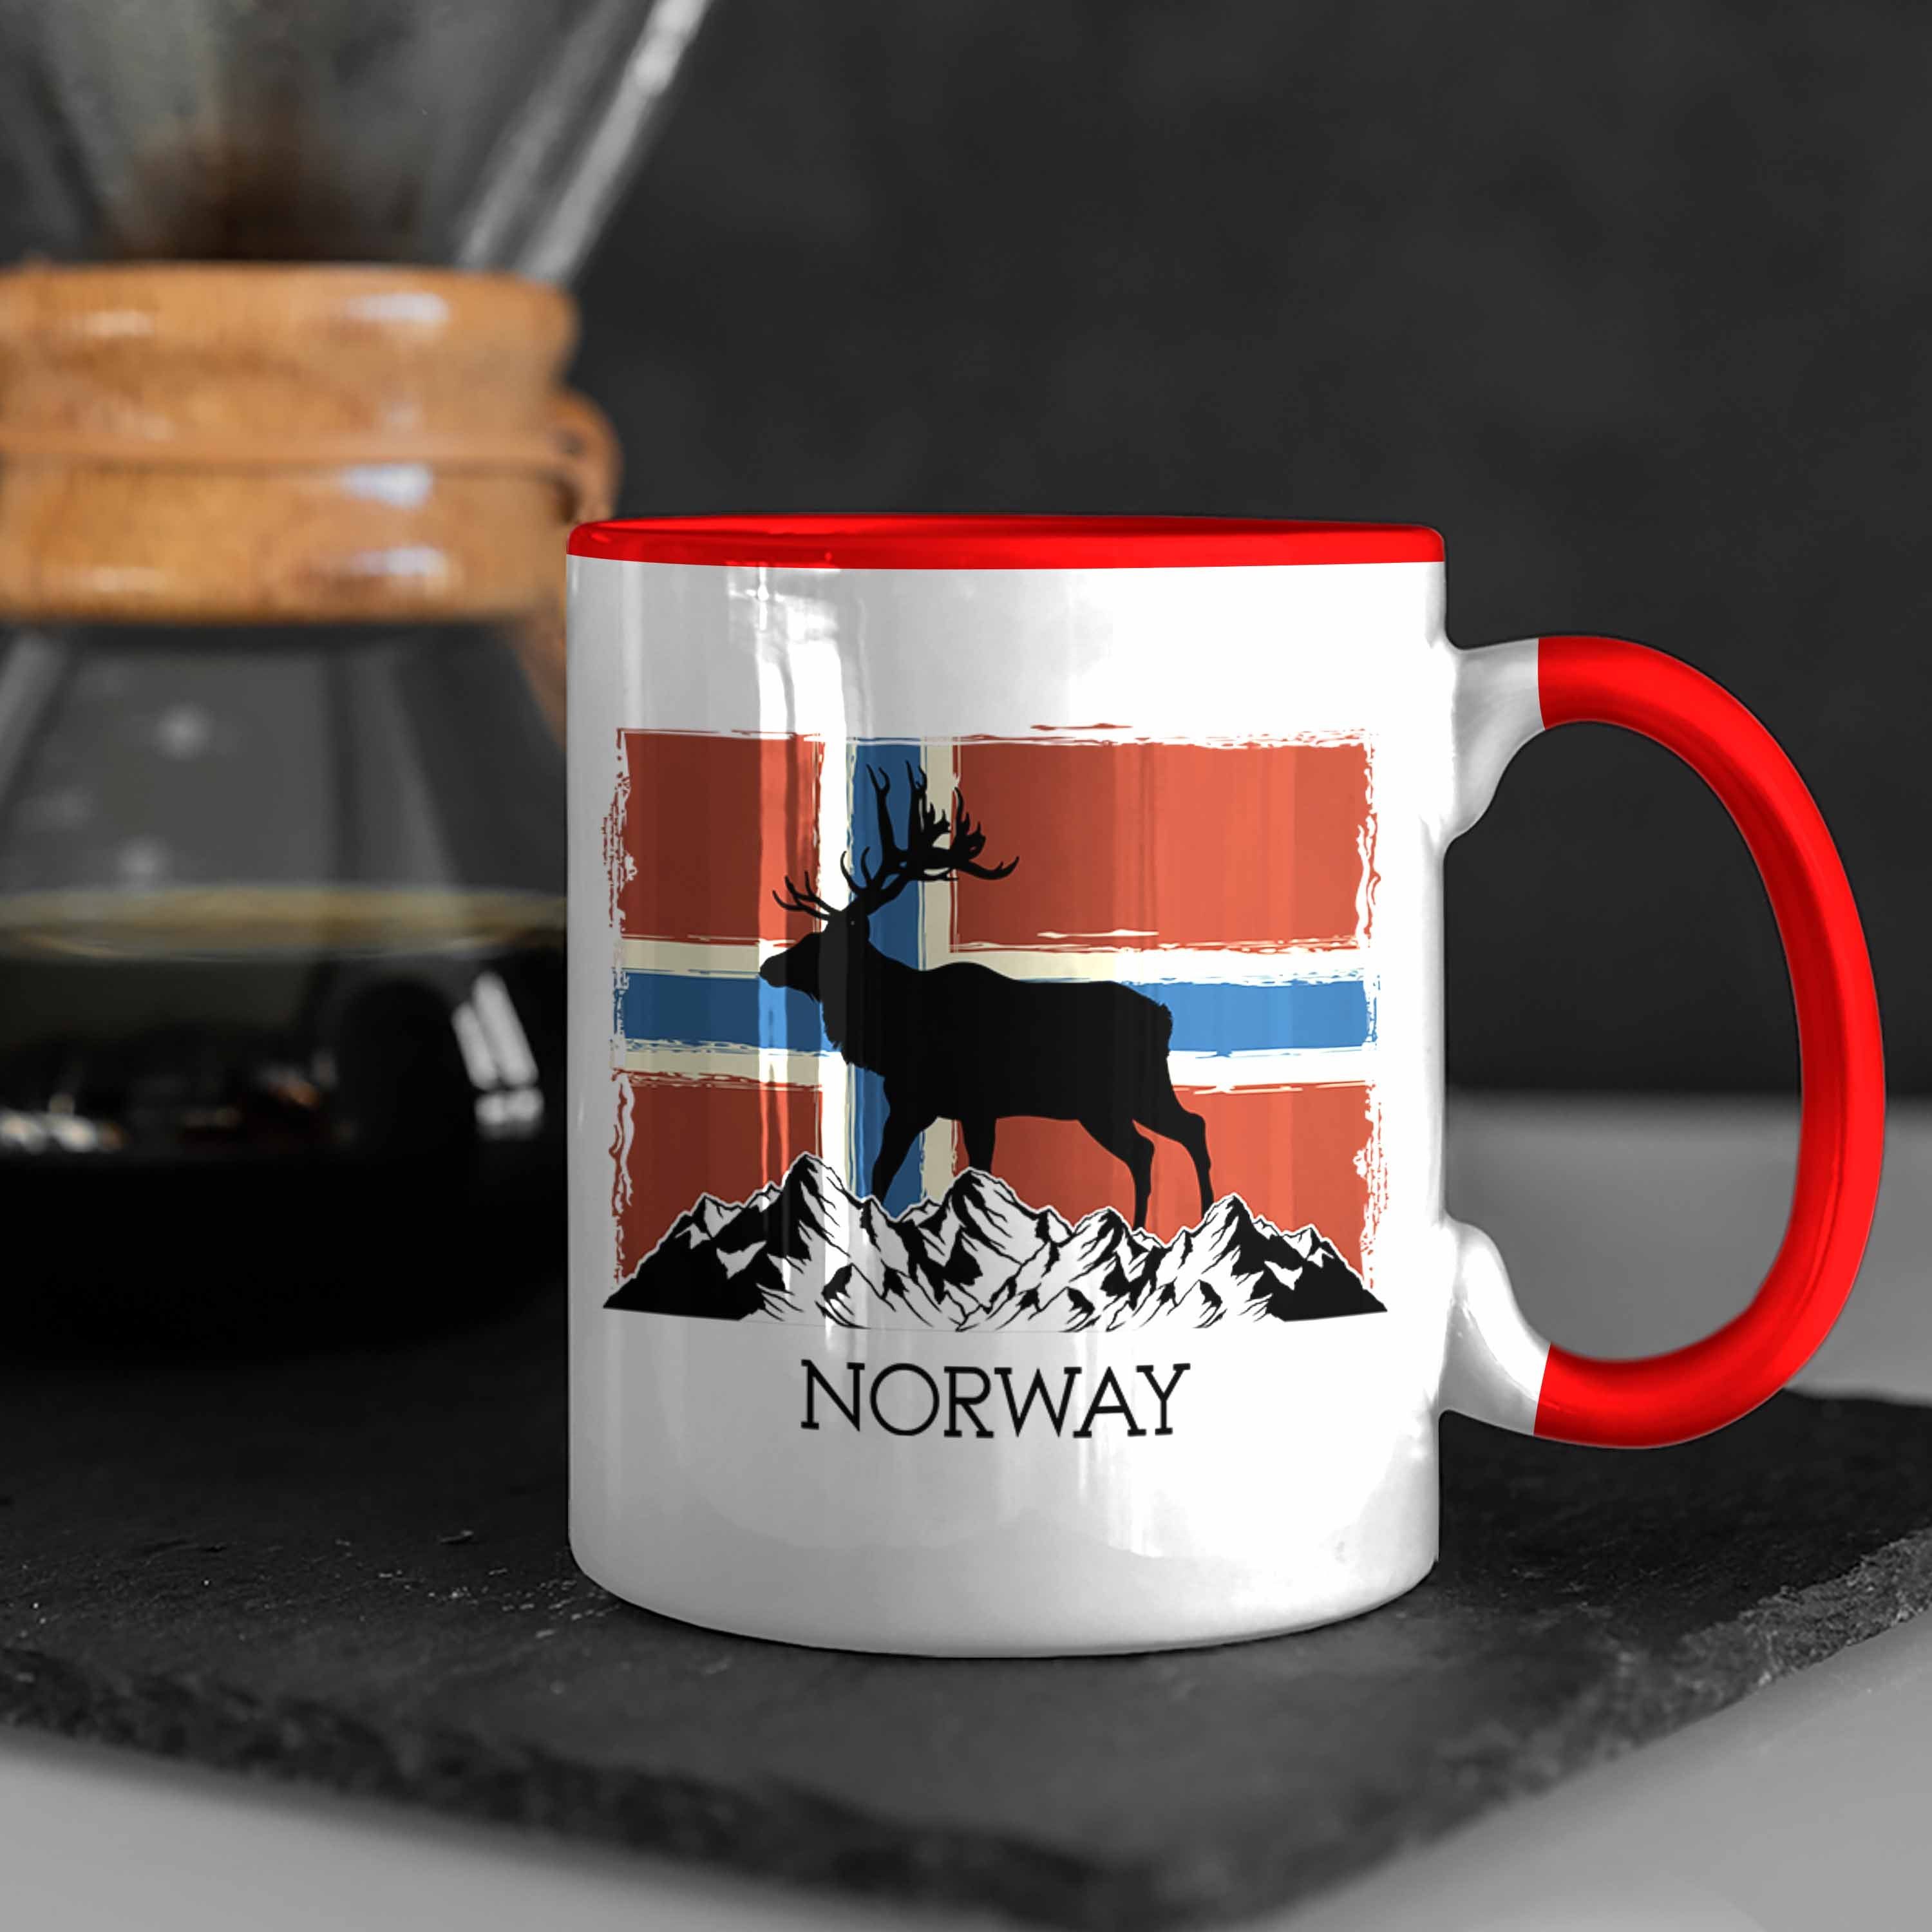 Elch Nordkap Norwegen Geschenke Trendation Rot Trendation Tasse Flagge - Tasse Norway